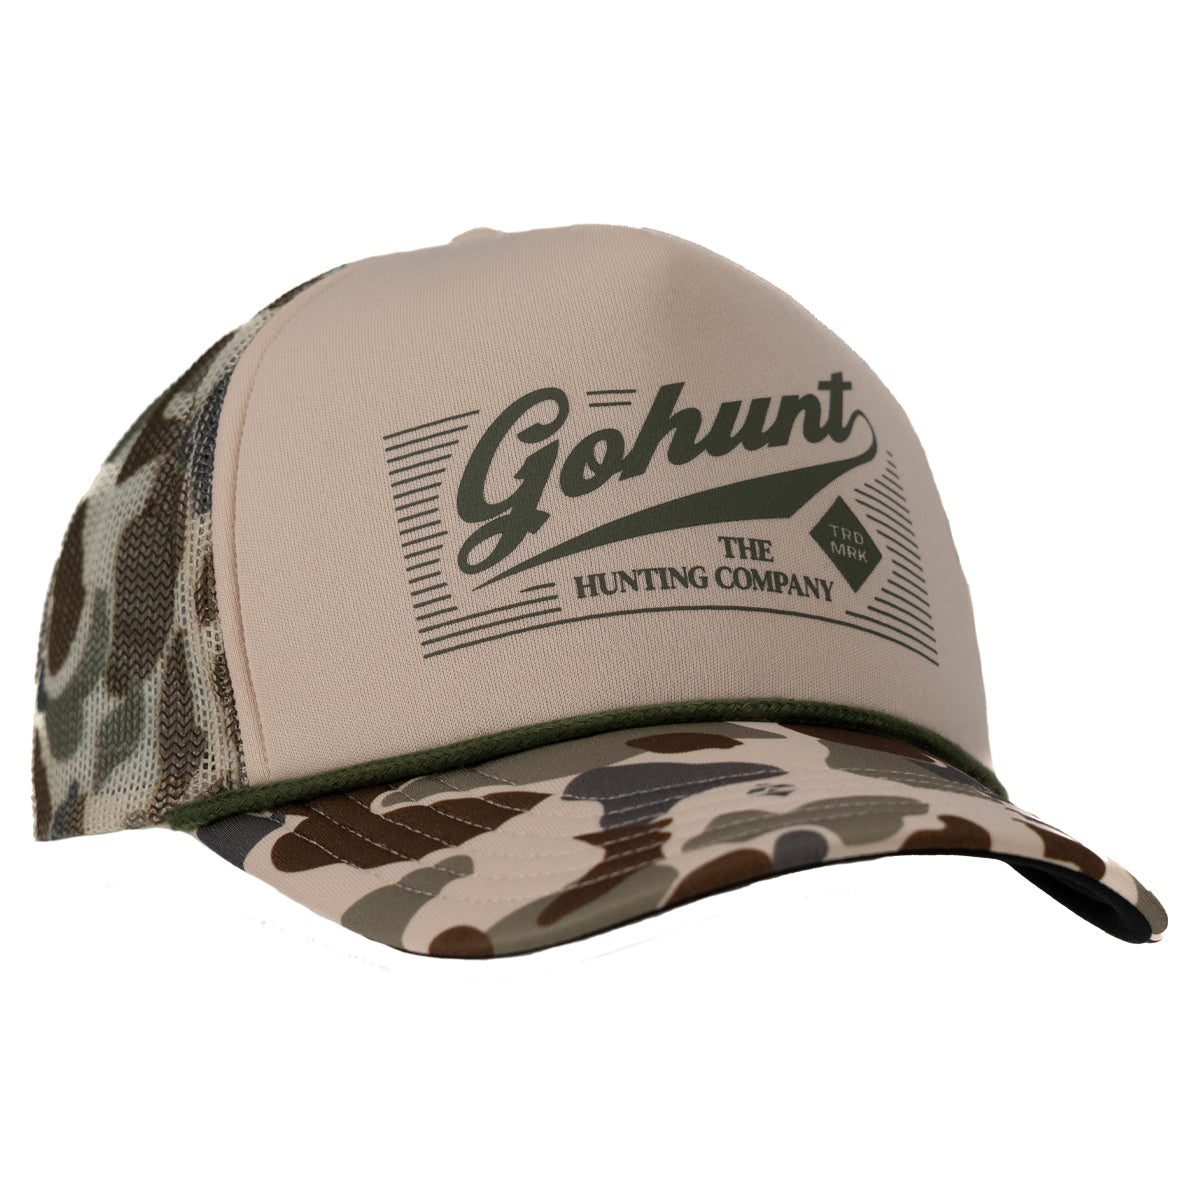 Las Vegas LV Green Camouflage Baseball Cap Hat Adjustable Strap